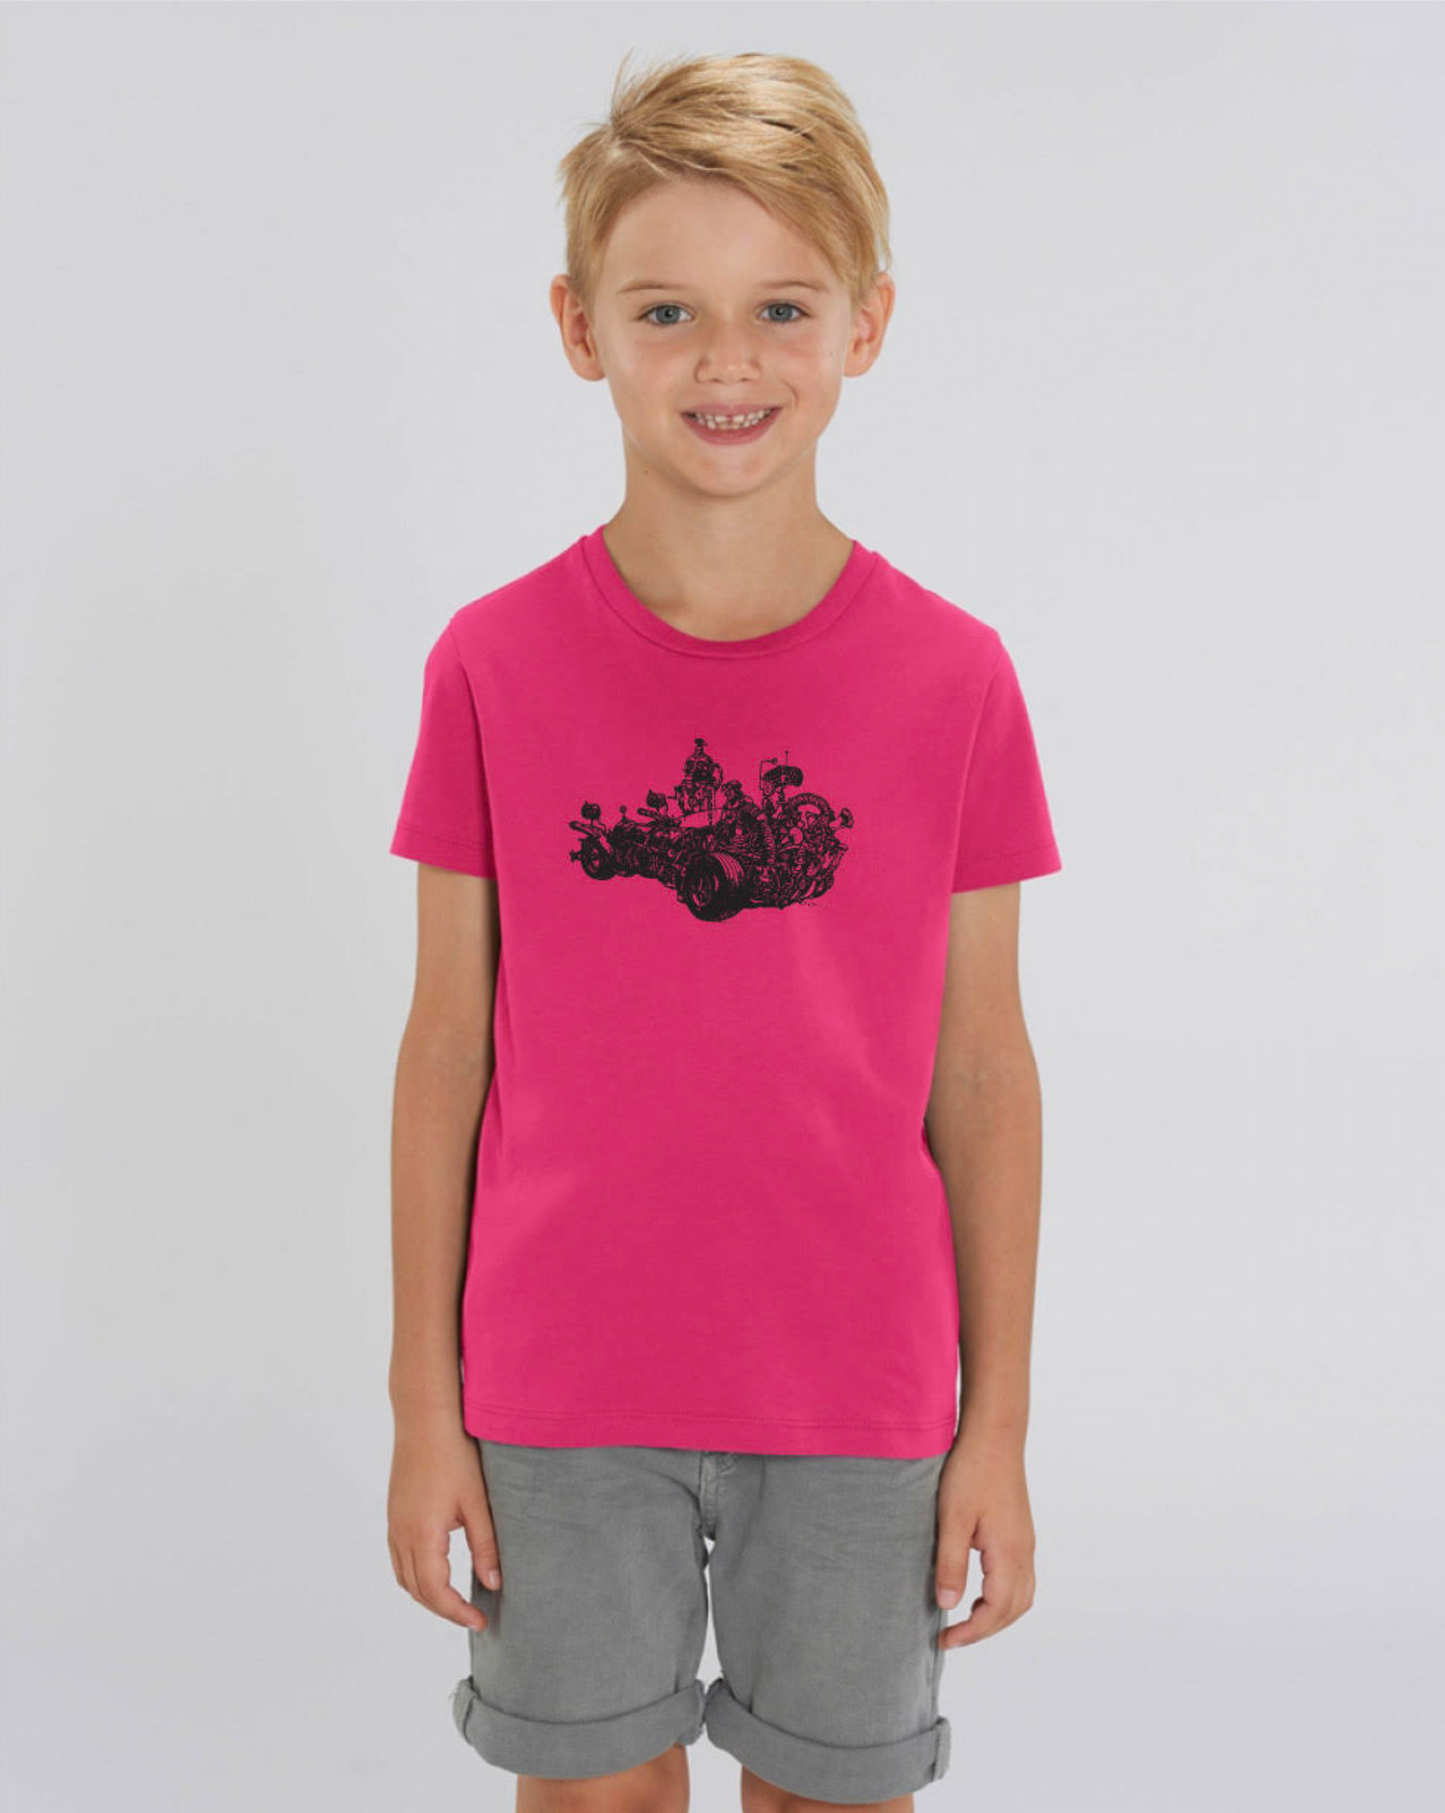 Reodor og Il tempo gigante - Raspberry, t-skjorte